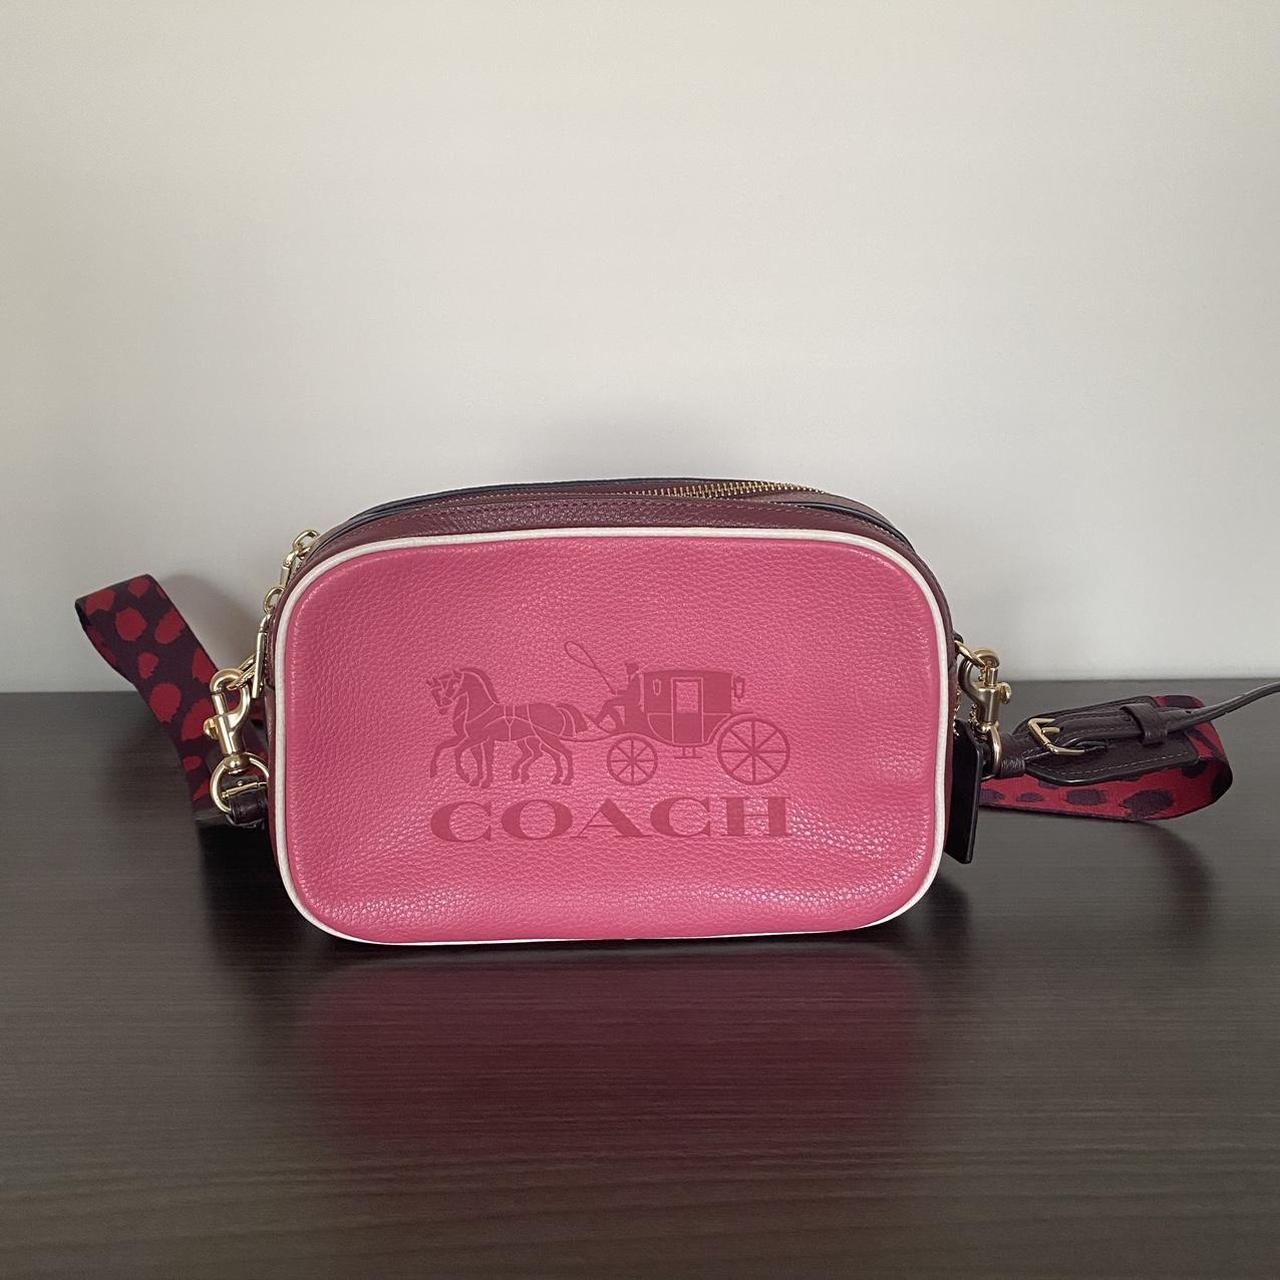 Coach Pink Leather Jes Colorblock Crossbody Bag Coach